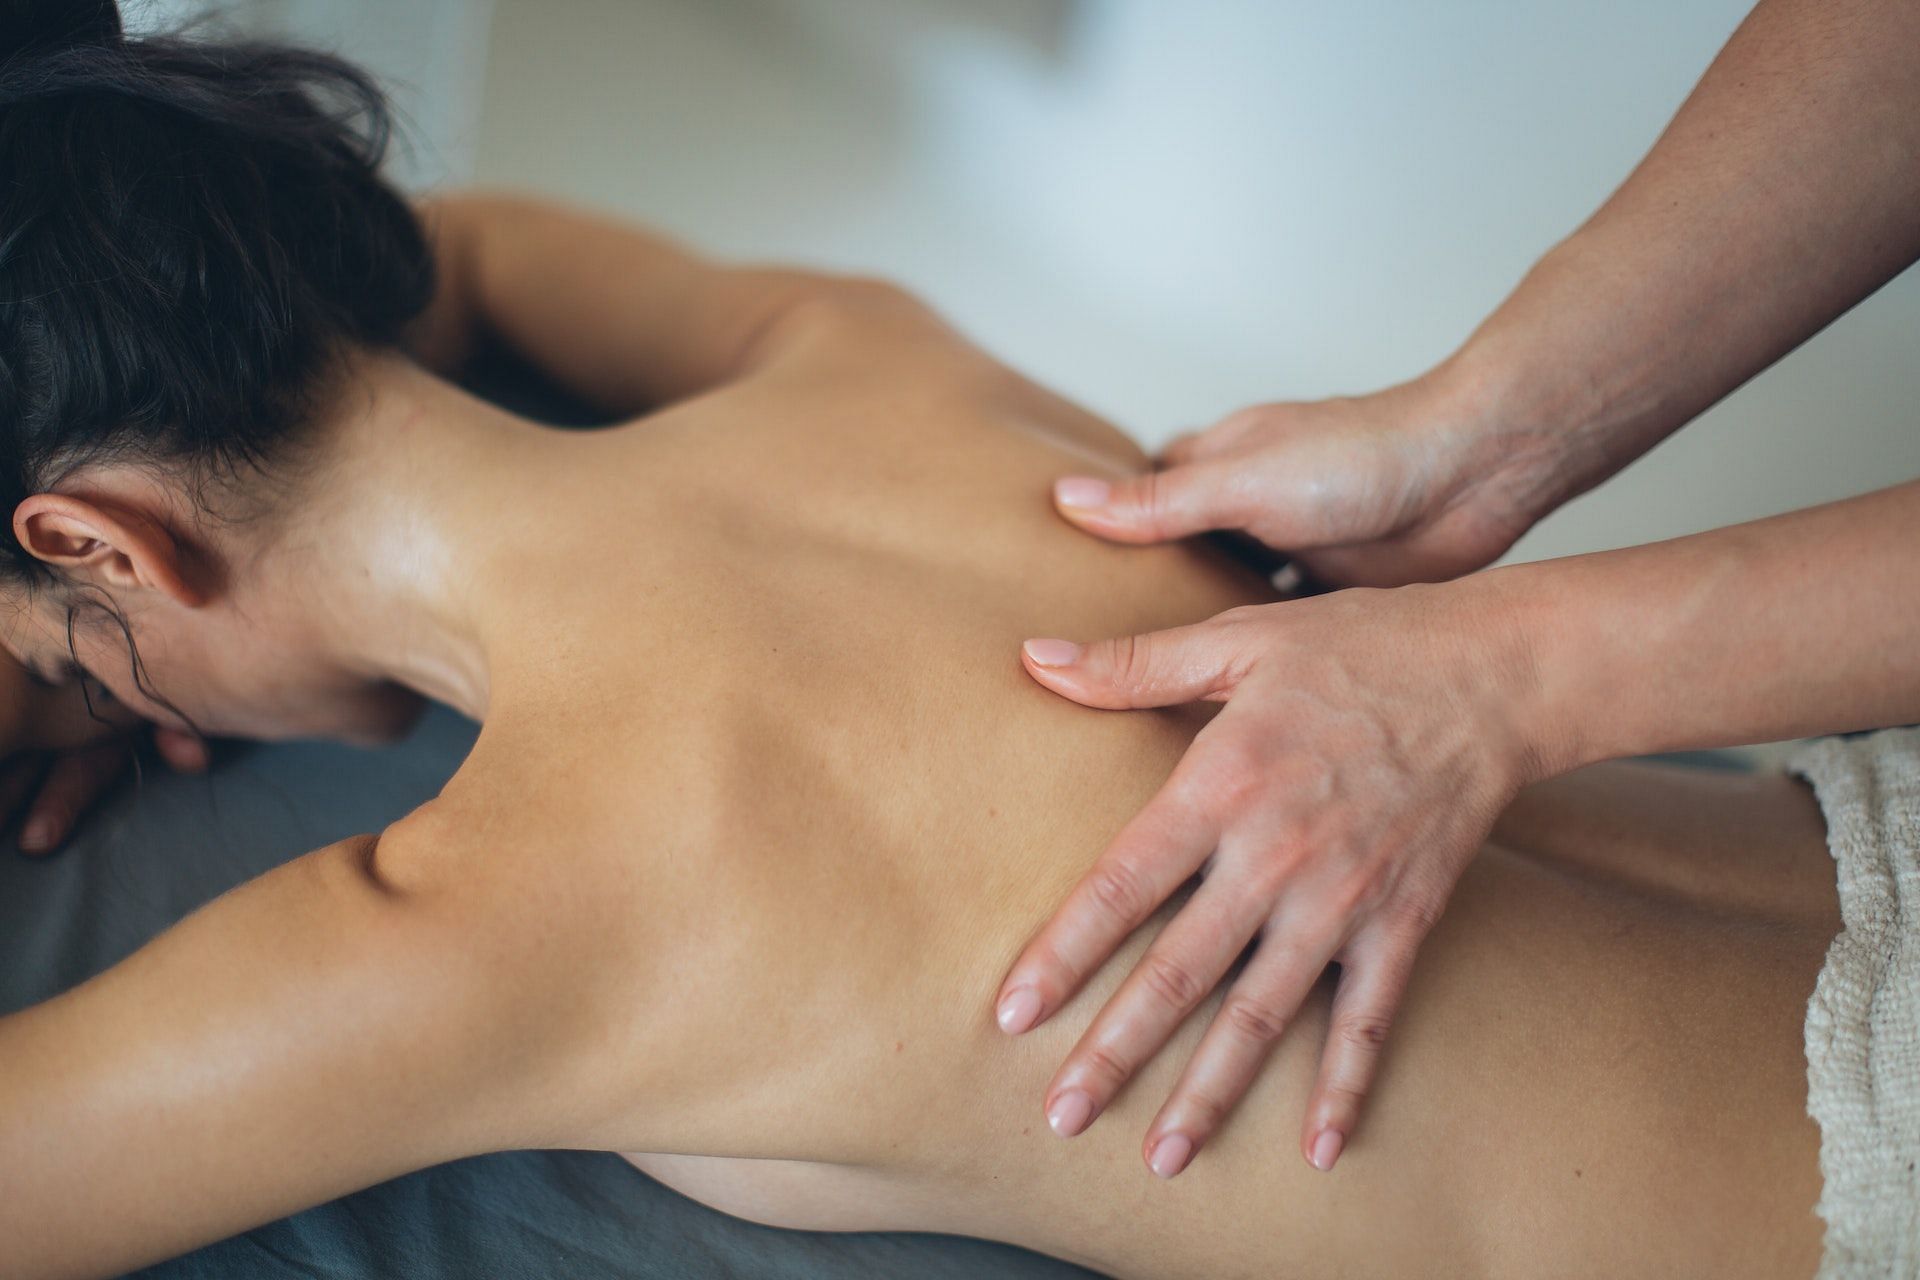 Deep tissue massage improves the range of motion. (Image via Pexels/Elina Fairytale)